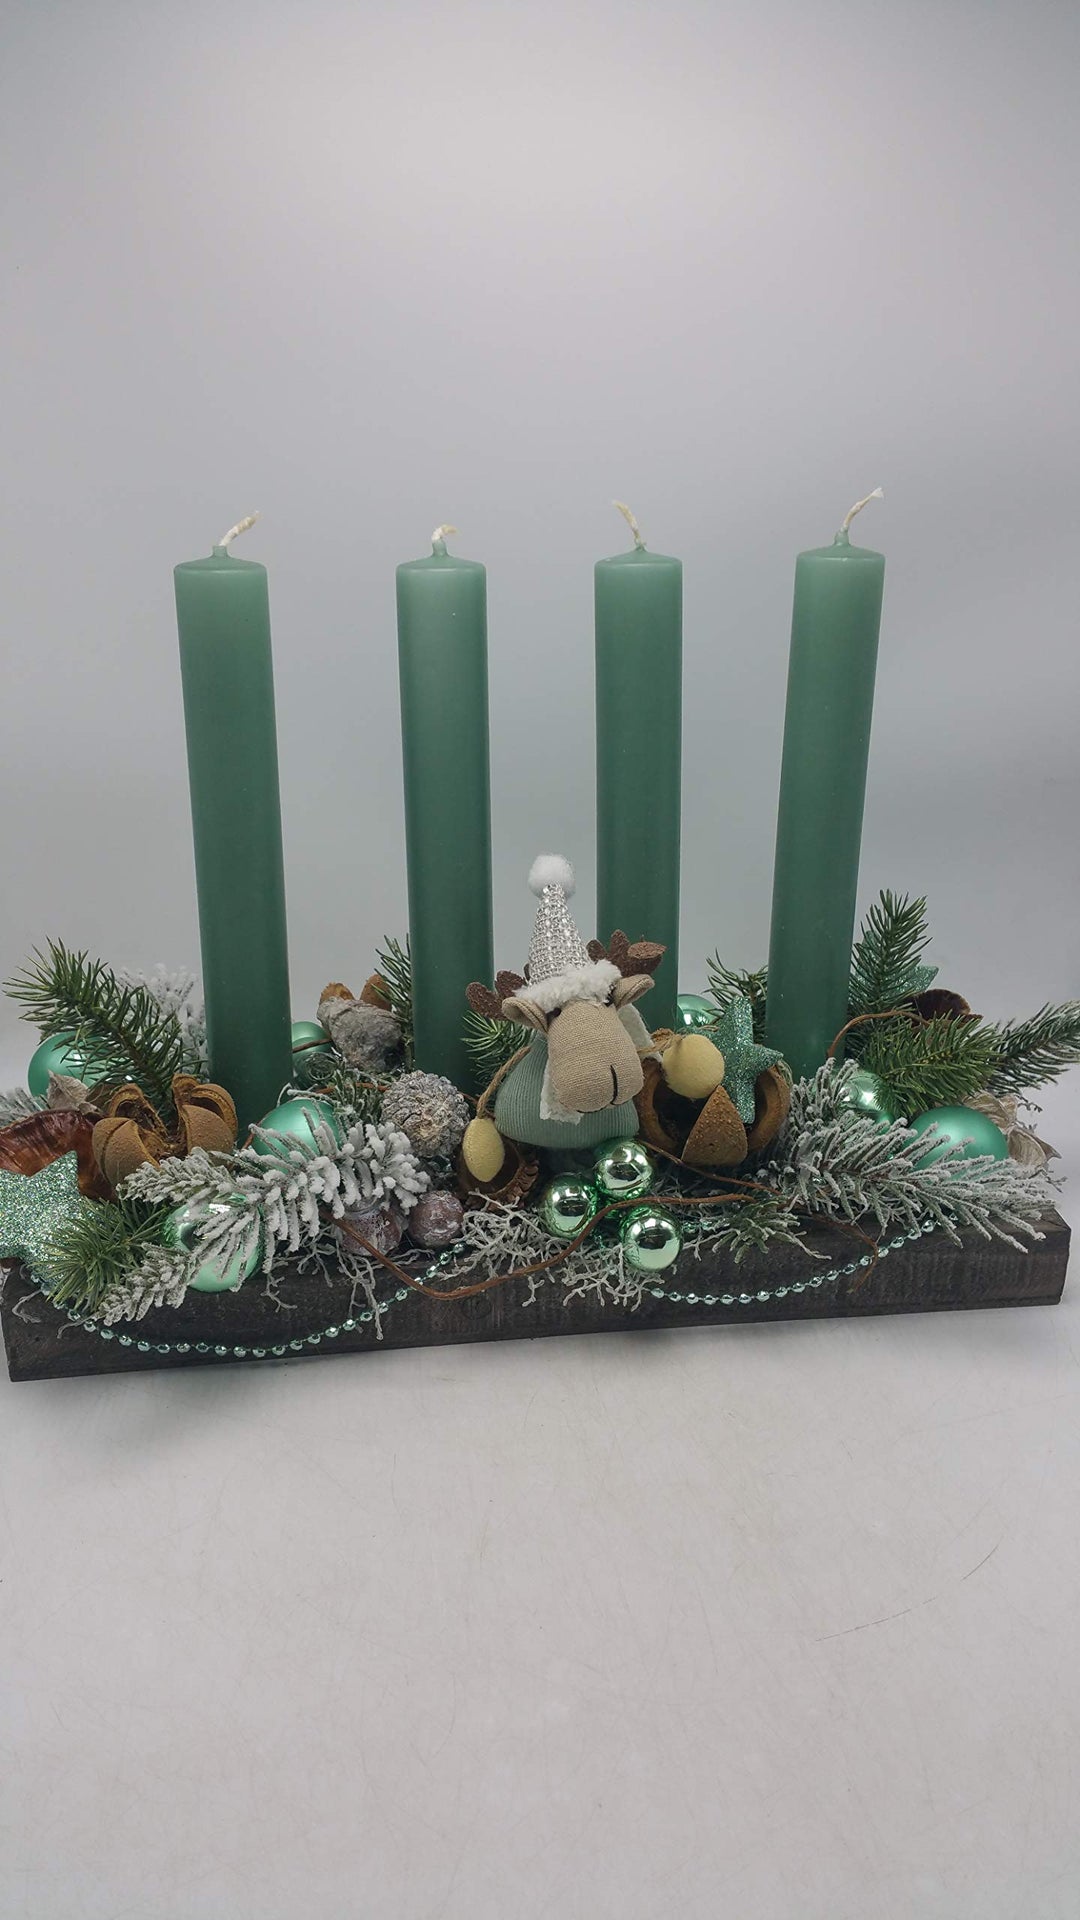 Weihnachtsgesteck Adventsgesteck Kunstfloristik Kerzen Kugeln Sterne Elch mint